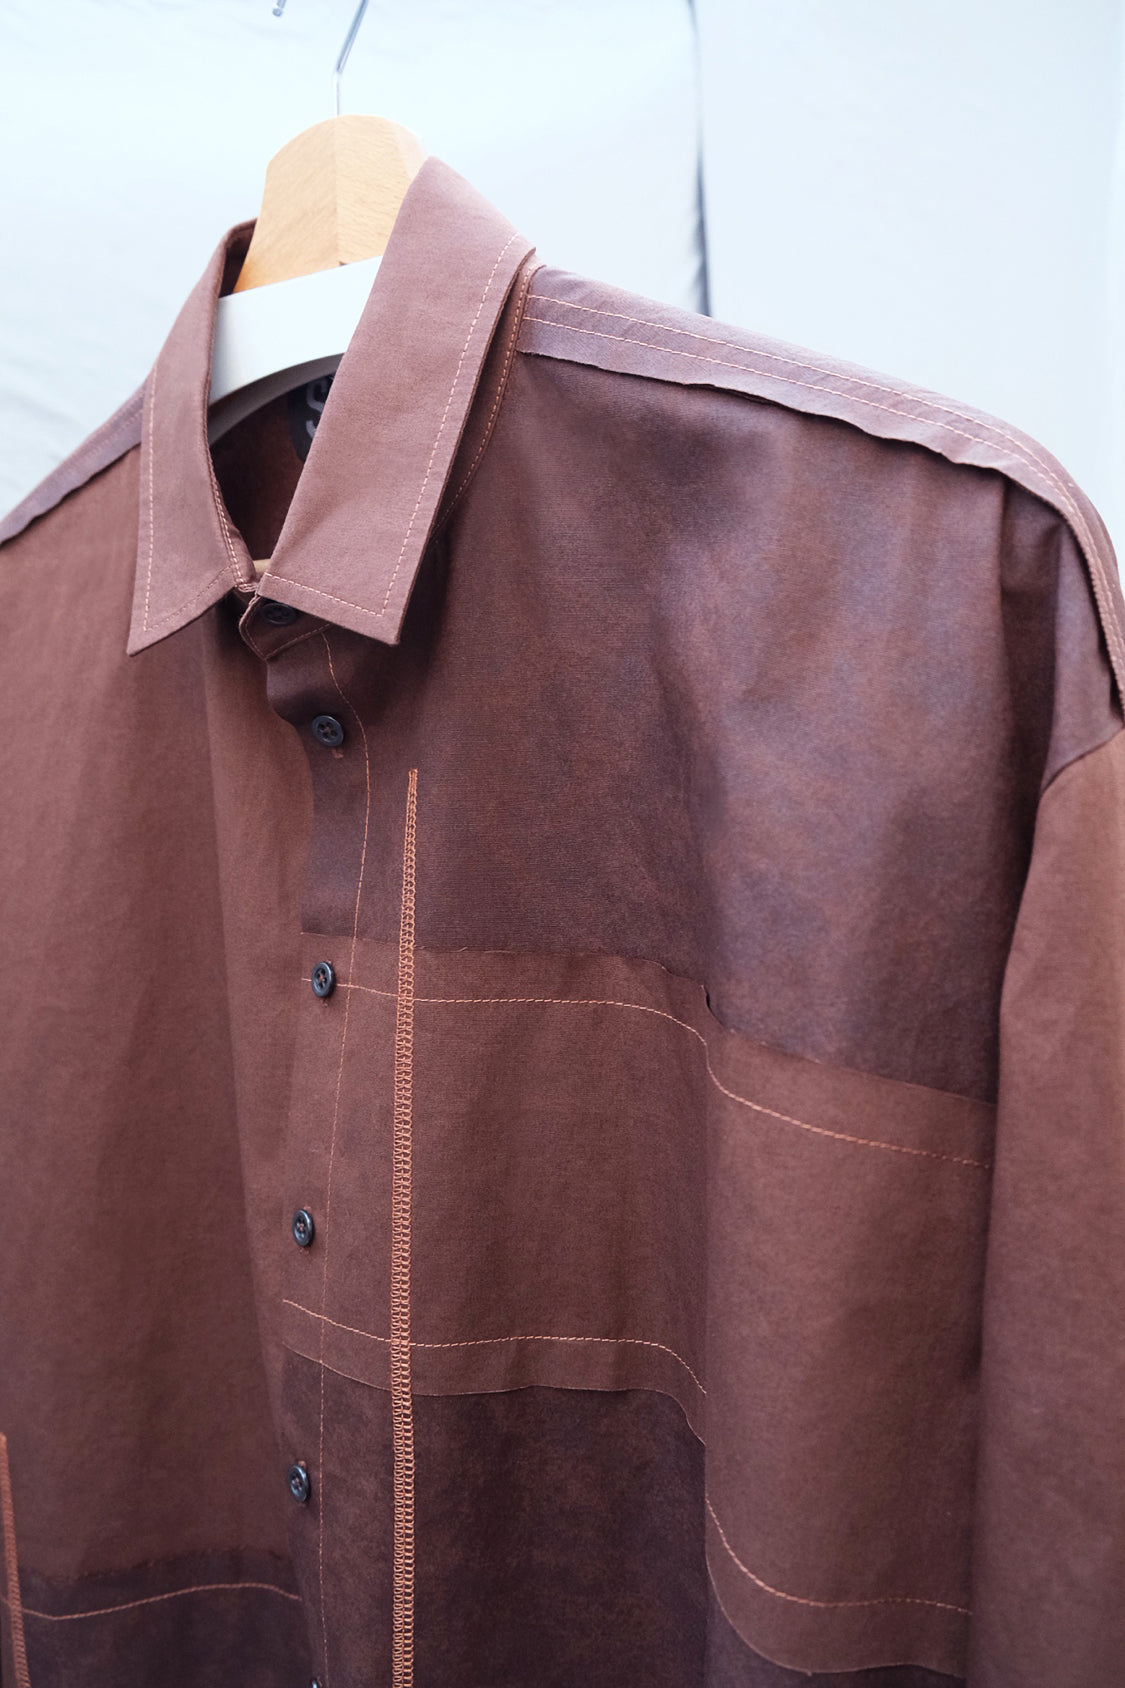 CONTRAST TECH SHIRT / Japanese KAKISHIBU textile